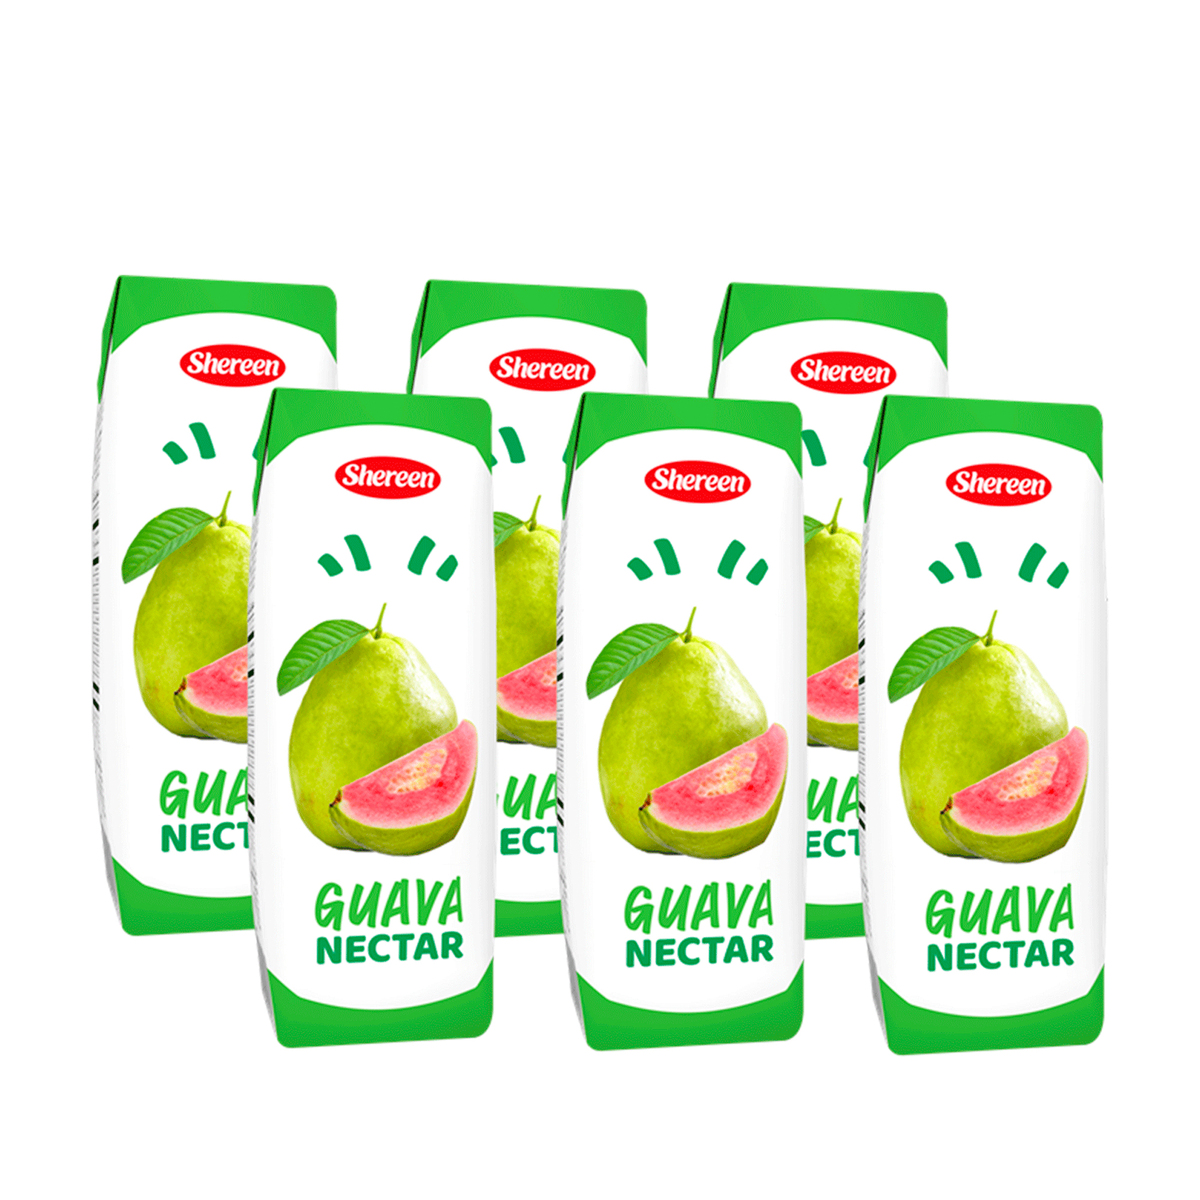 Shereen Guava Nectar Juice Tetra Pack 24 x 250 ml